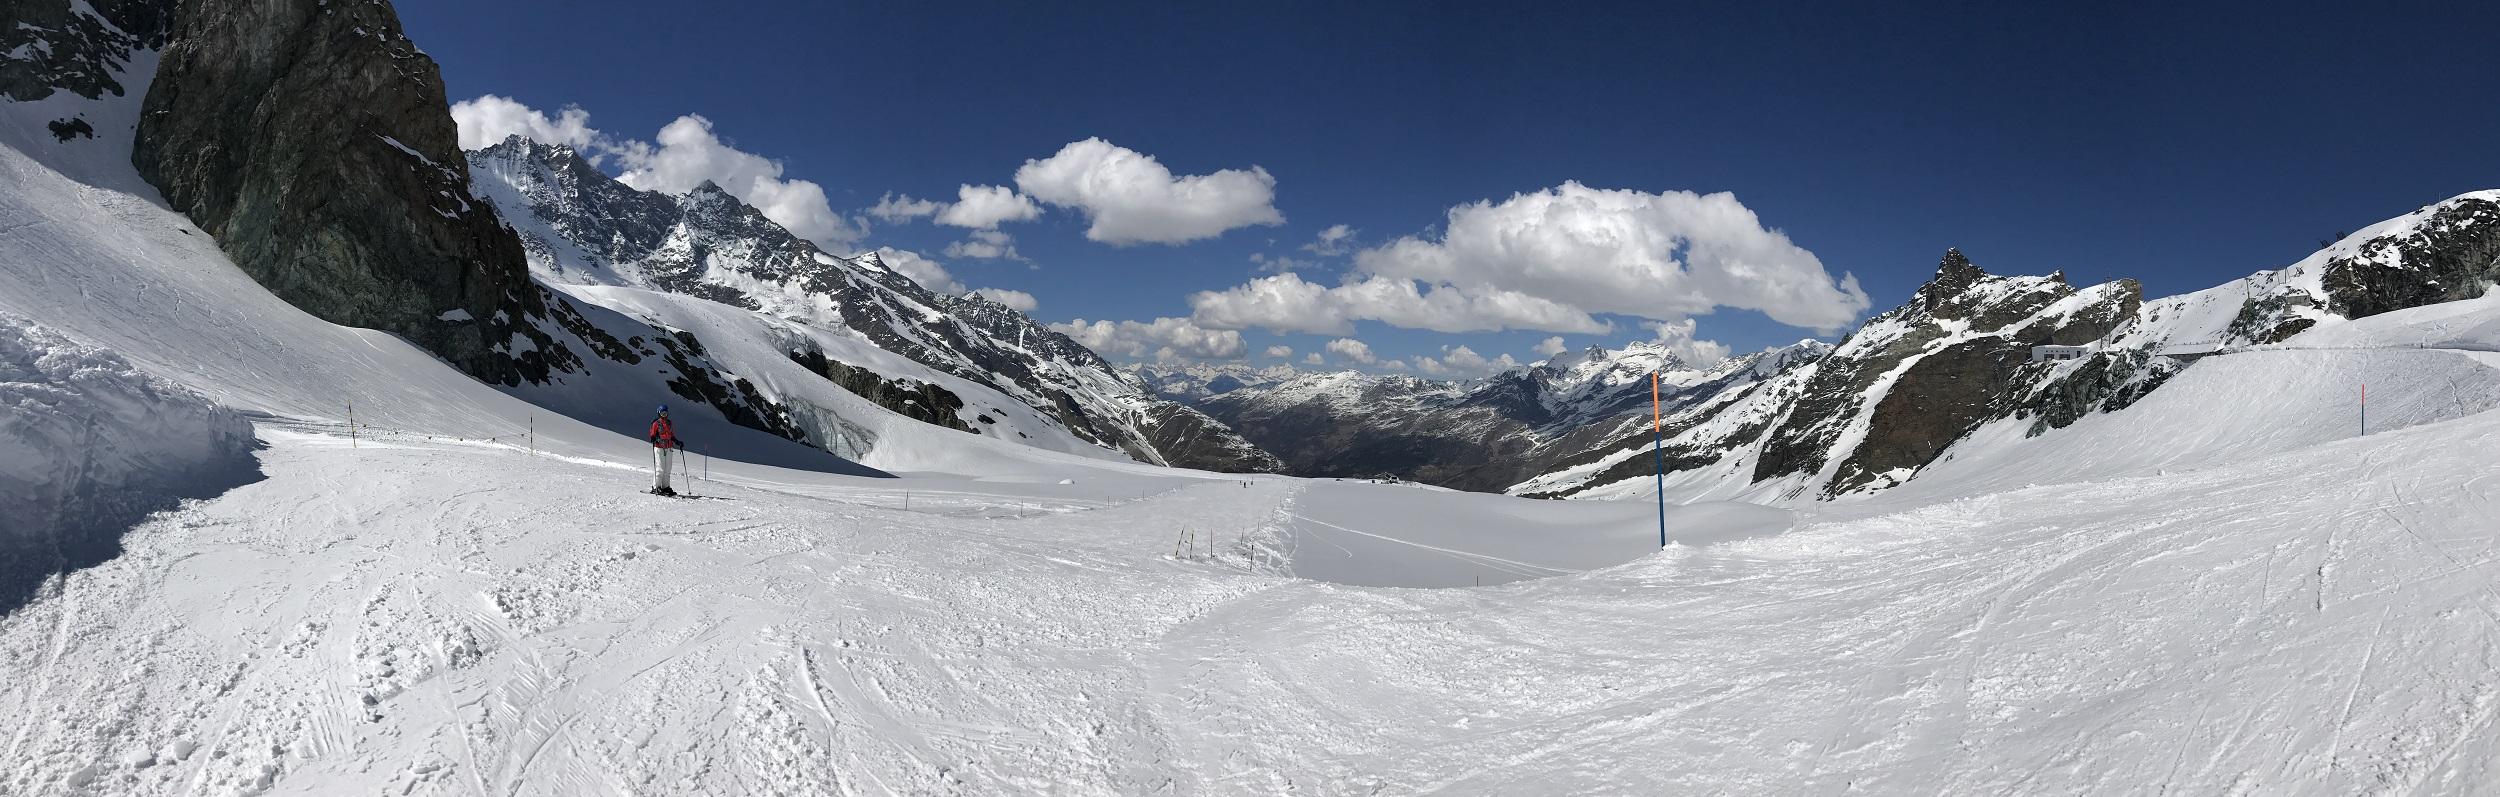 Schweiz-Saas-Fee-Skigebiet